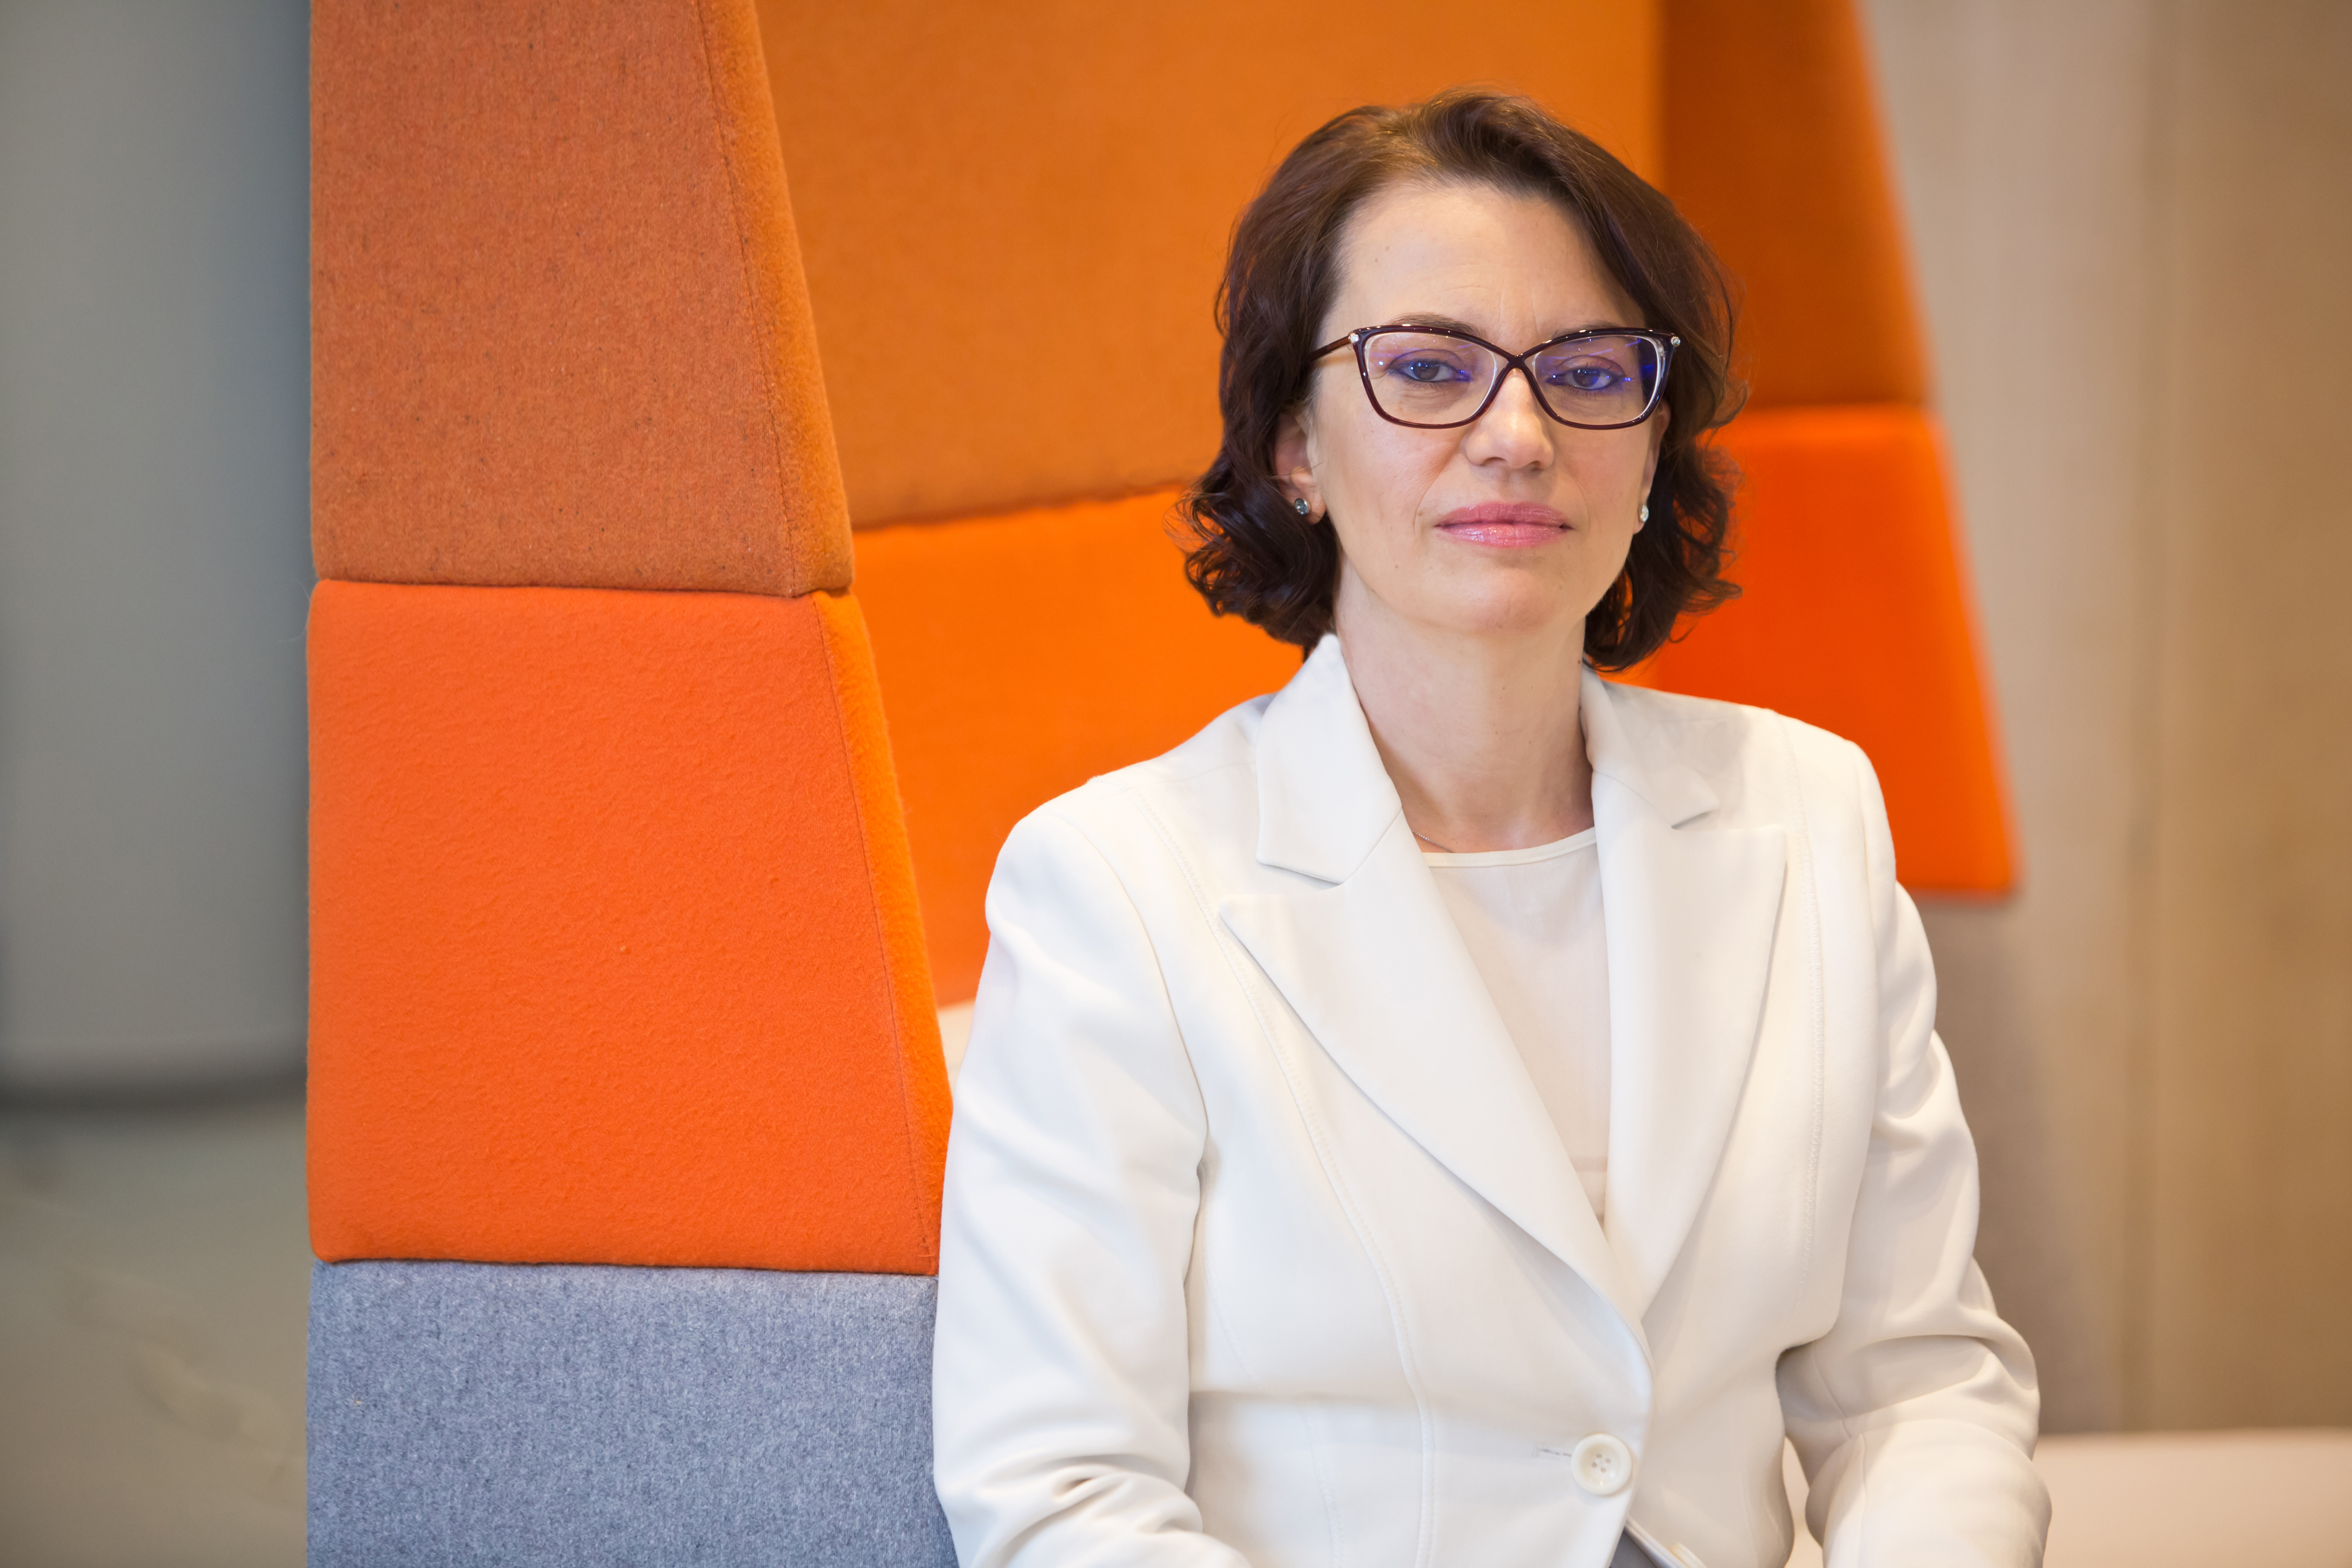 Gabriela Lupas-Ticu is the new Chief Marketing Officer of NN